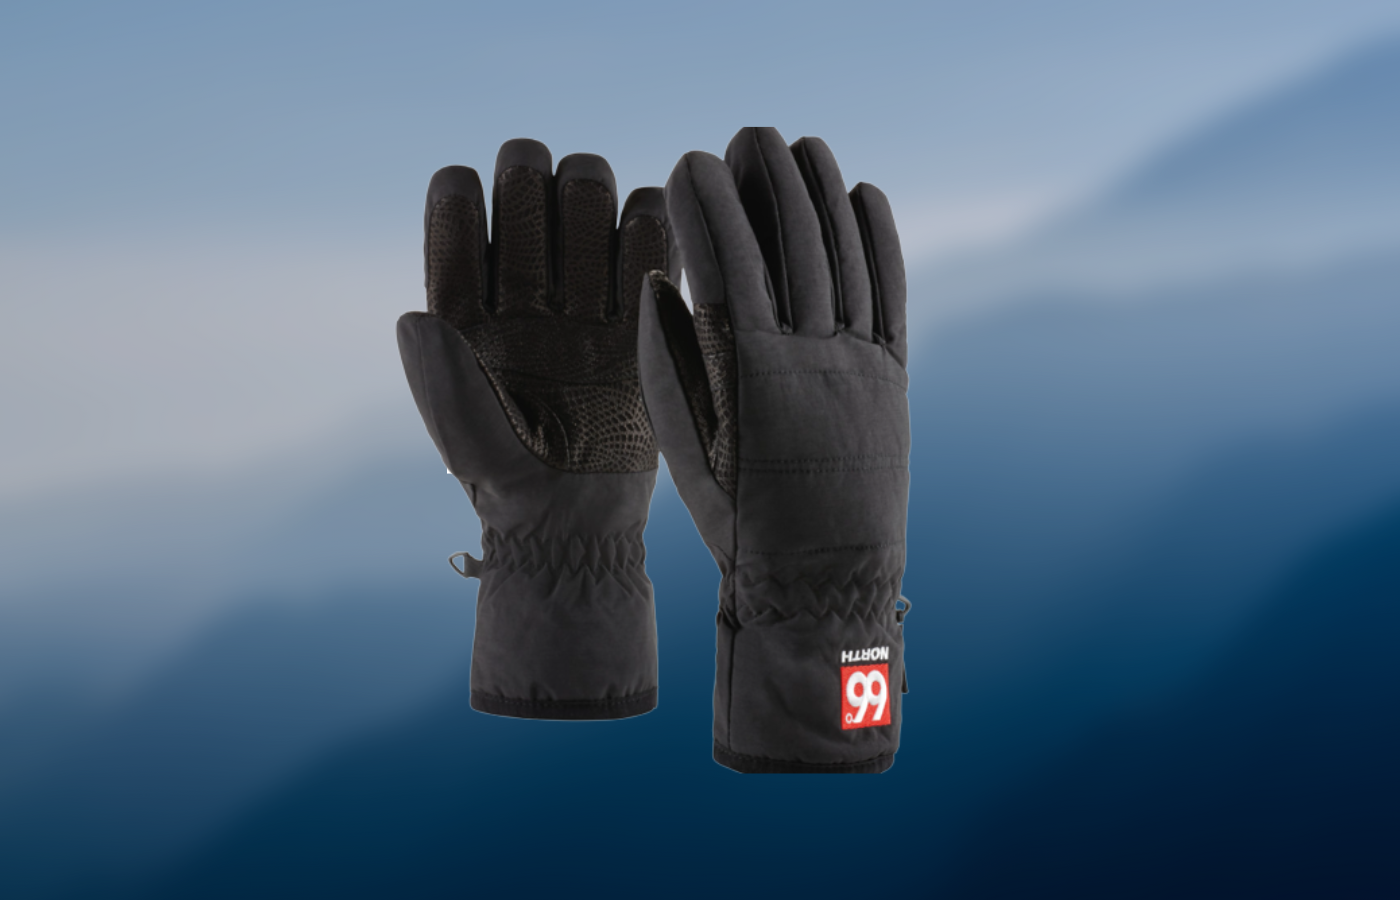 66 North Langjokull gloves